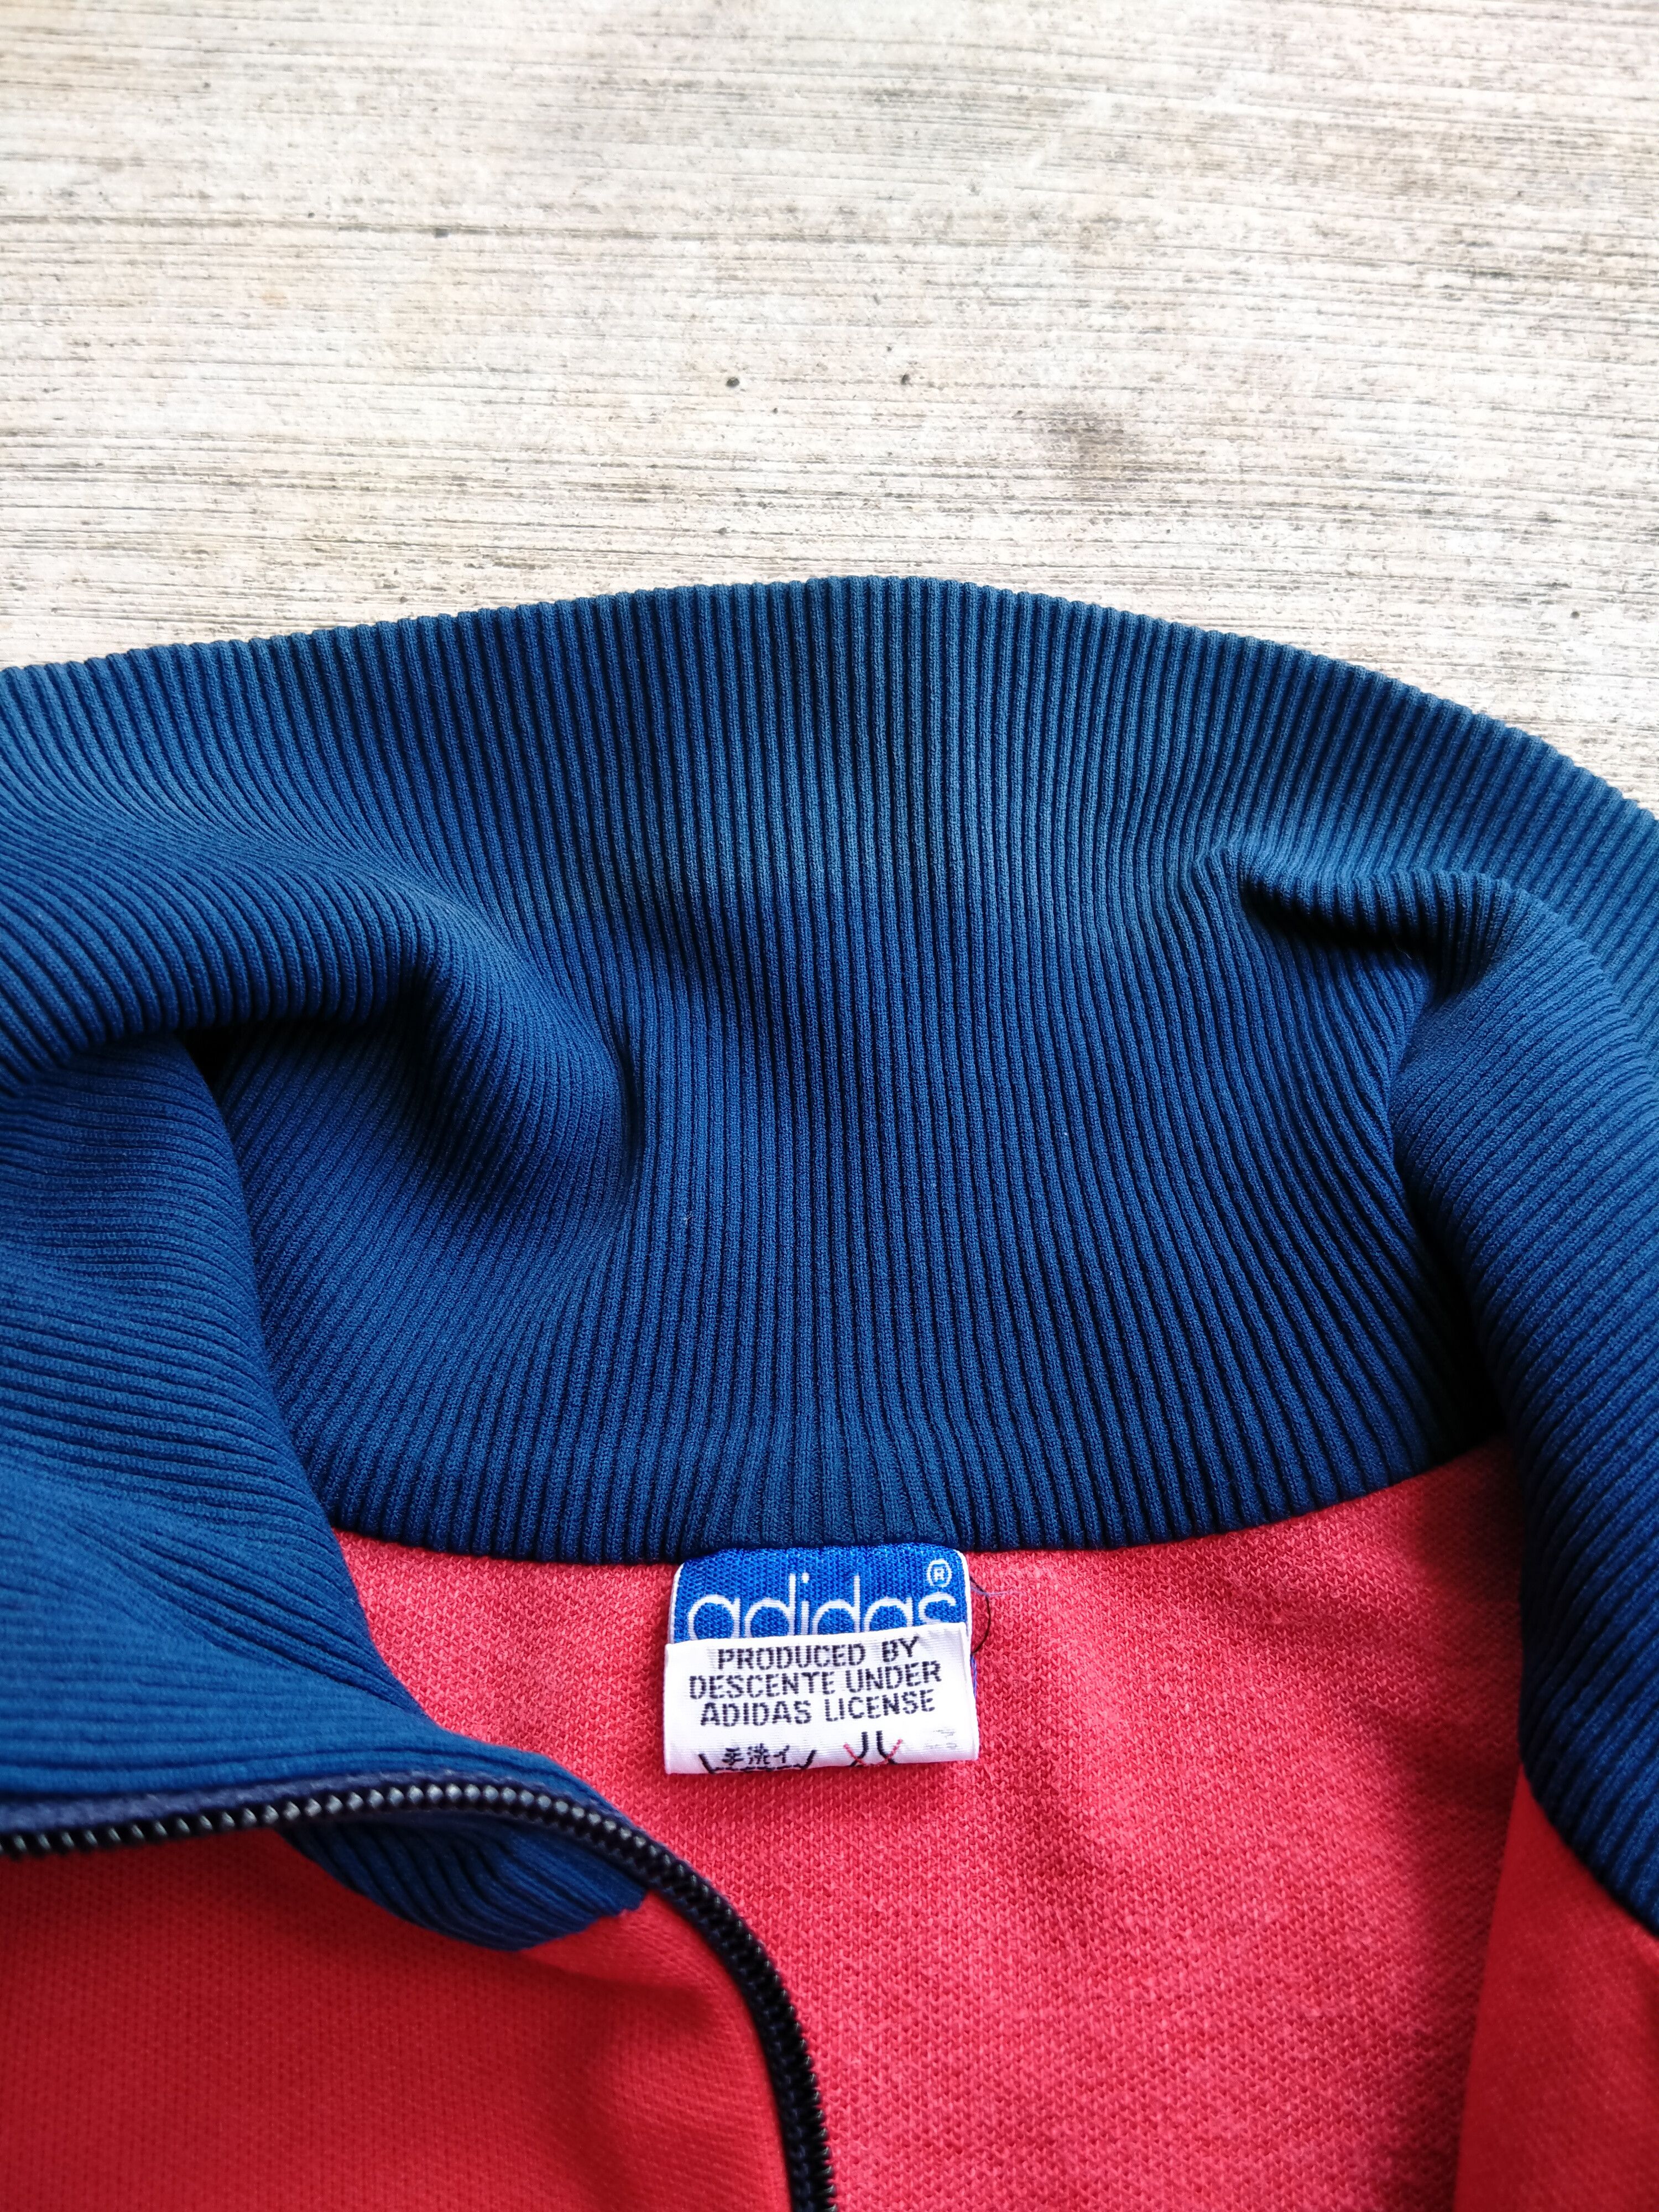 Adidas Rare Adidas Vintage 80s Red x Blue Tracktop Size US M / EU 48-50 / 2 - 8 Preview